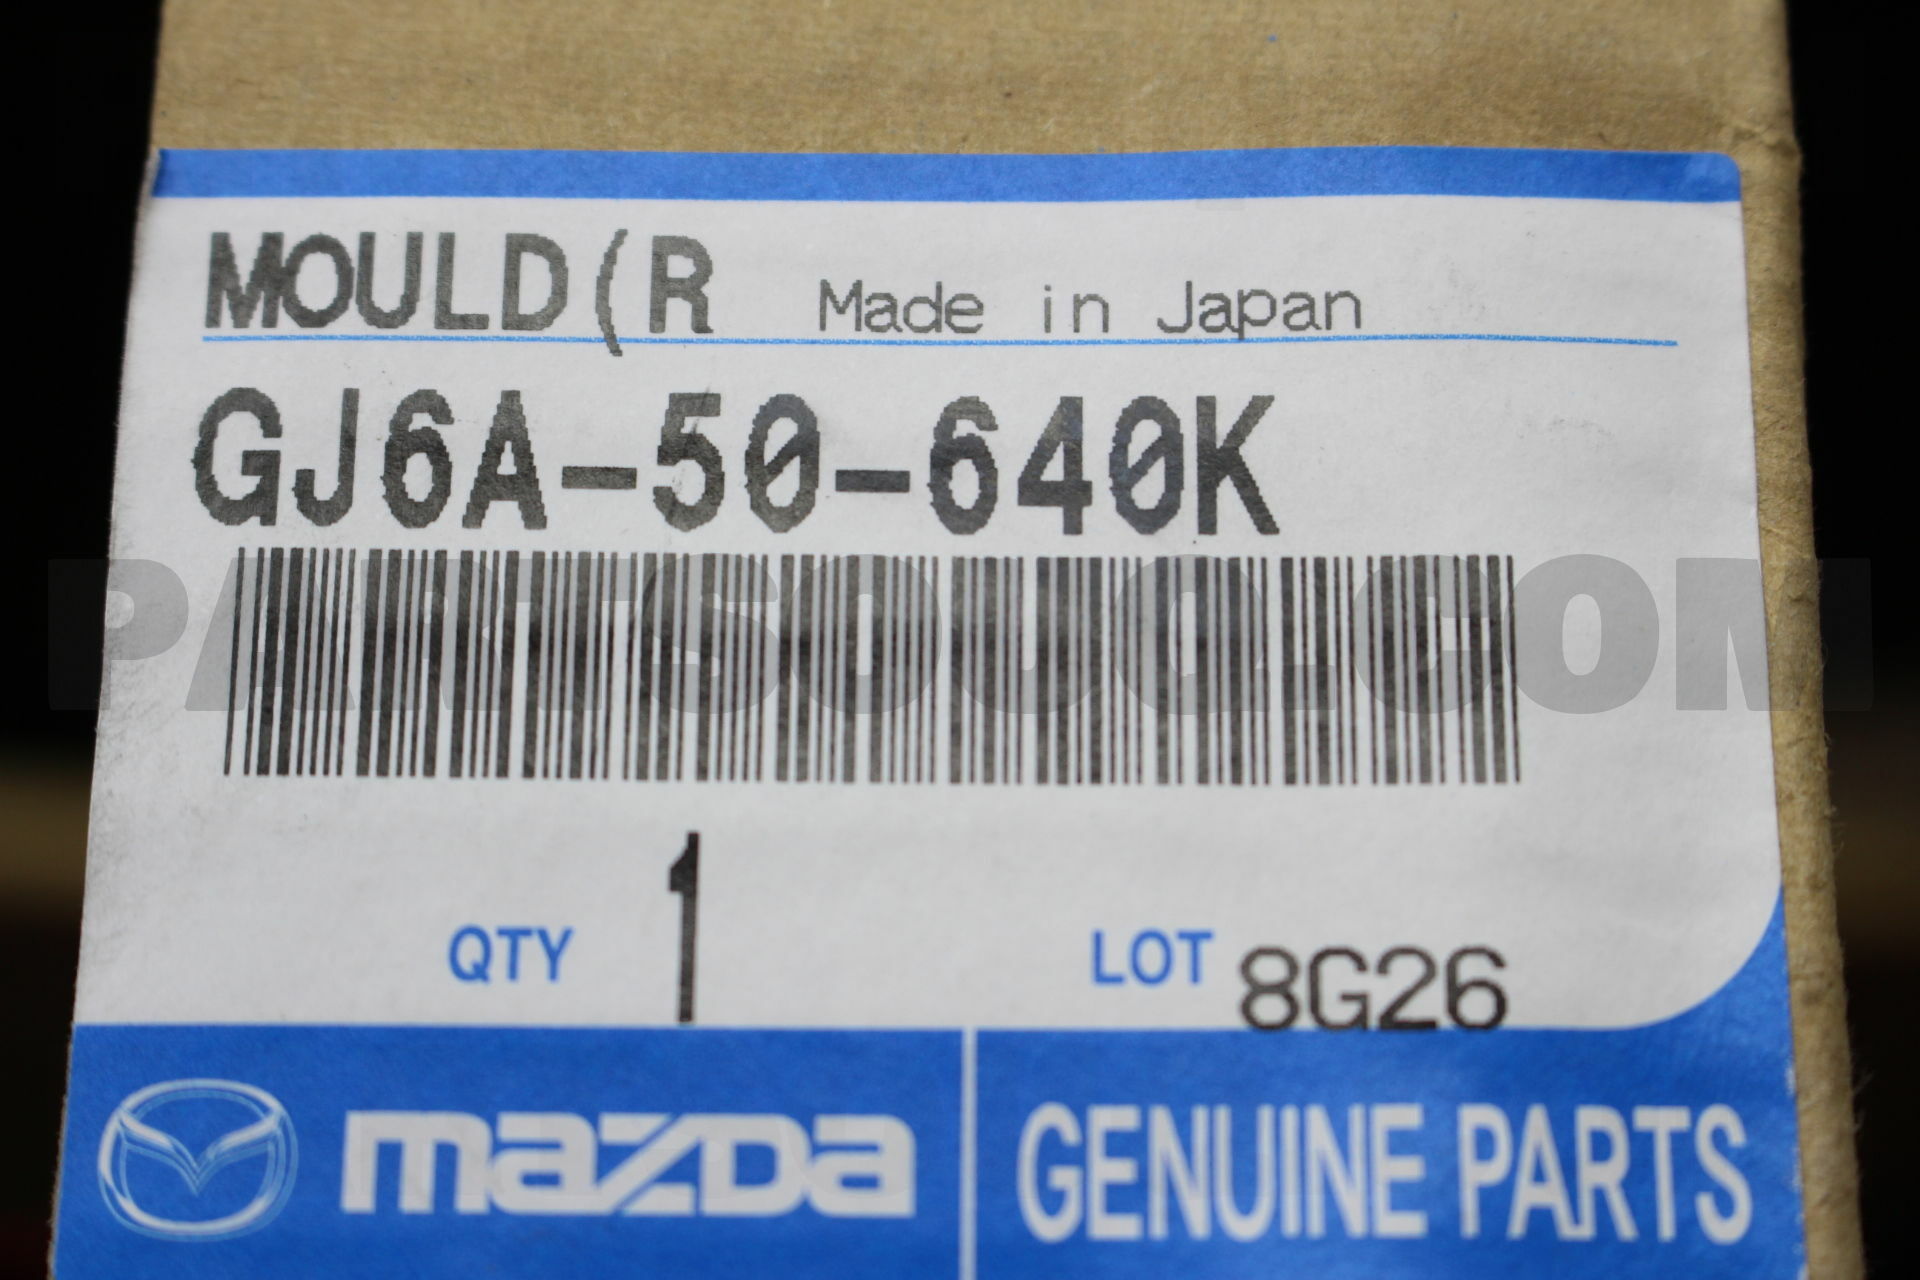 GJ6A50640K Genuine Mazda MOULD ,FRT.BELT GJ6A-50-640K R